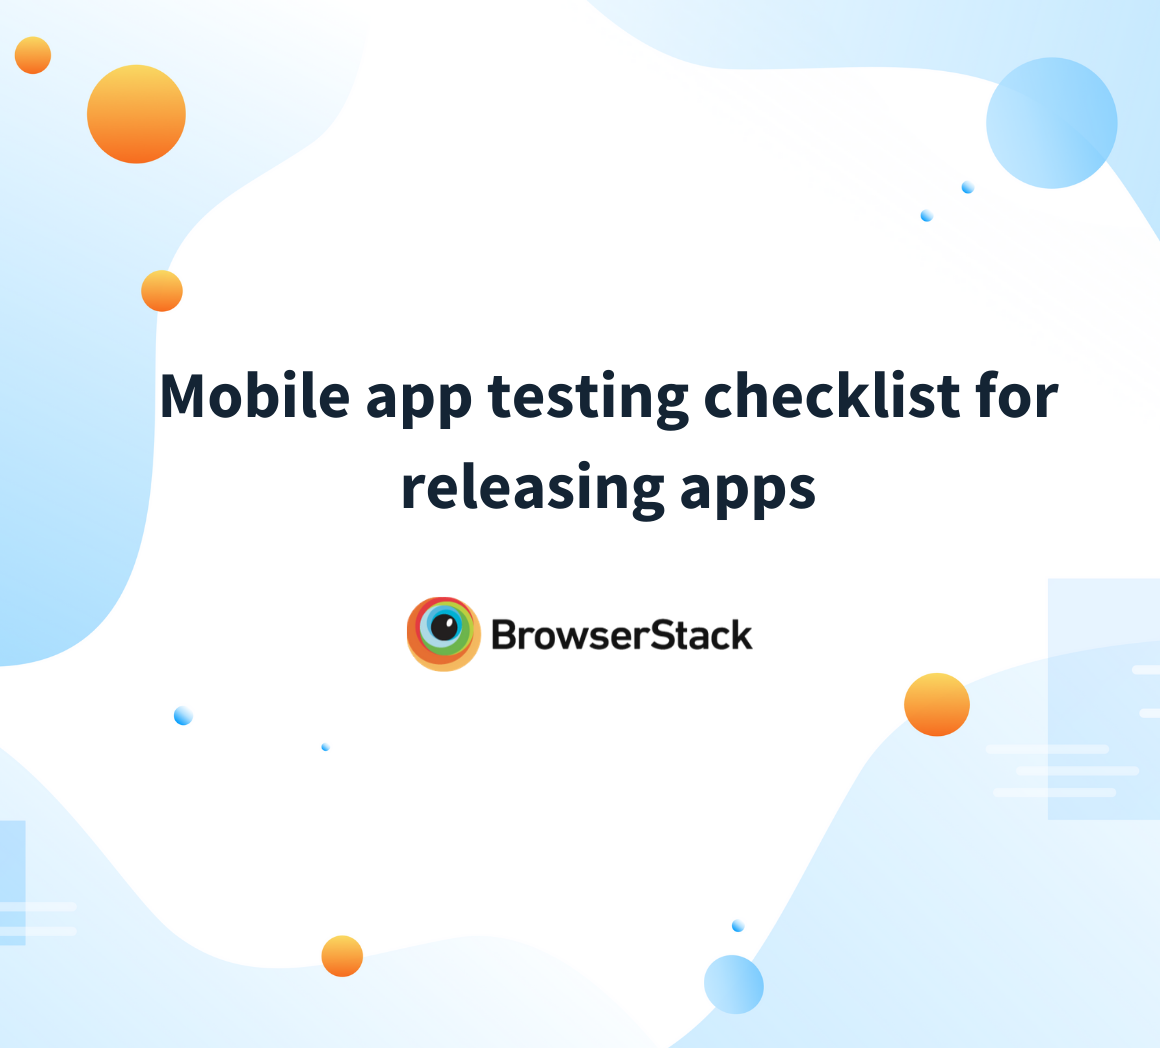 Mobile app testing checklist for releasing apps